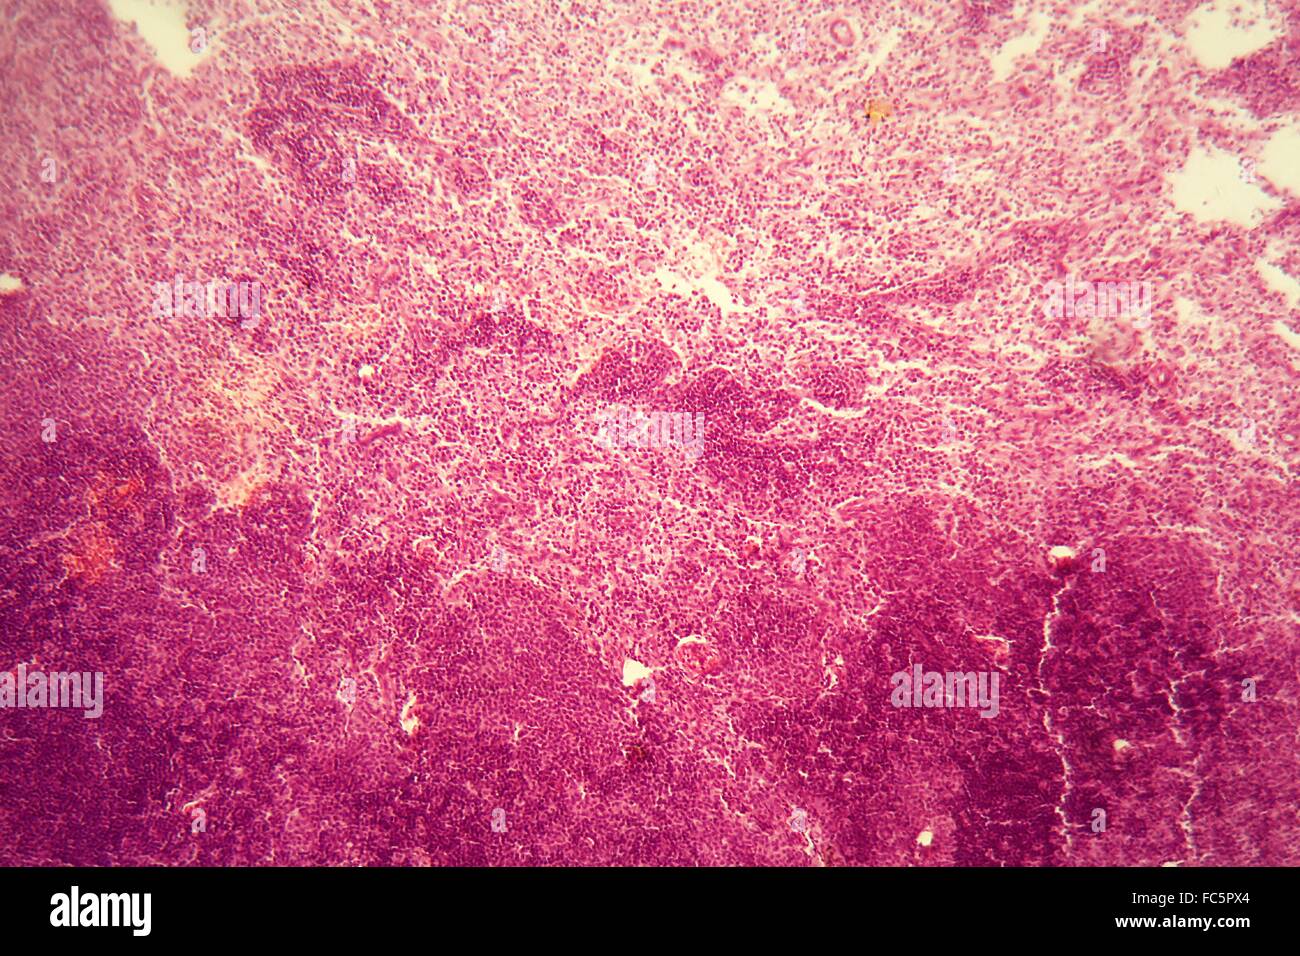 Lymph node under the microscope. Stock Photo